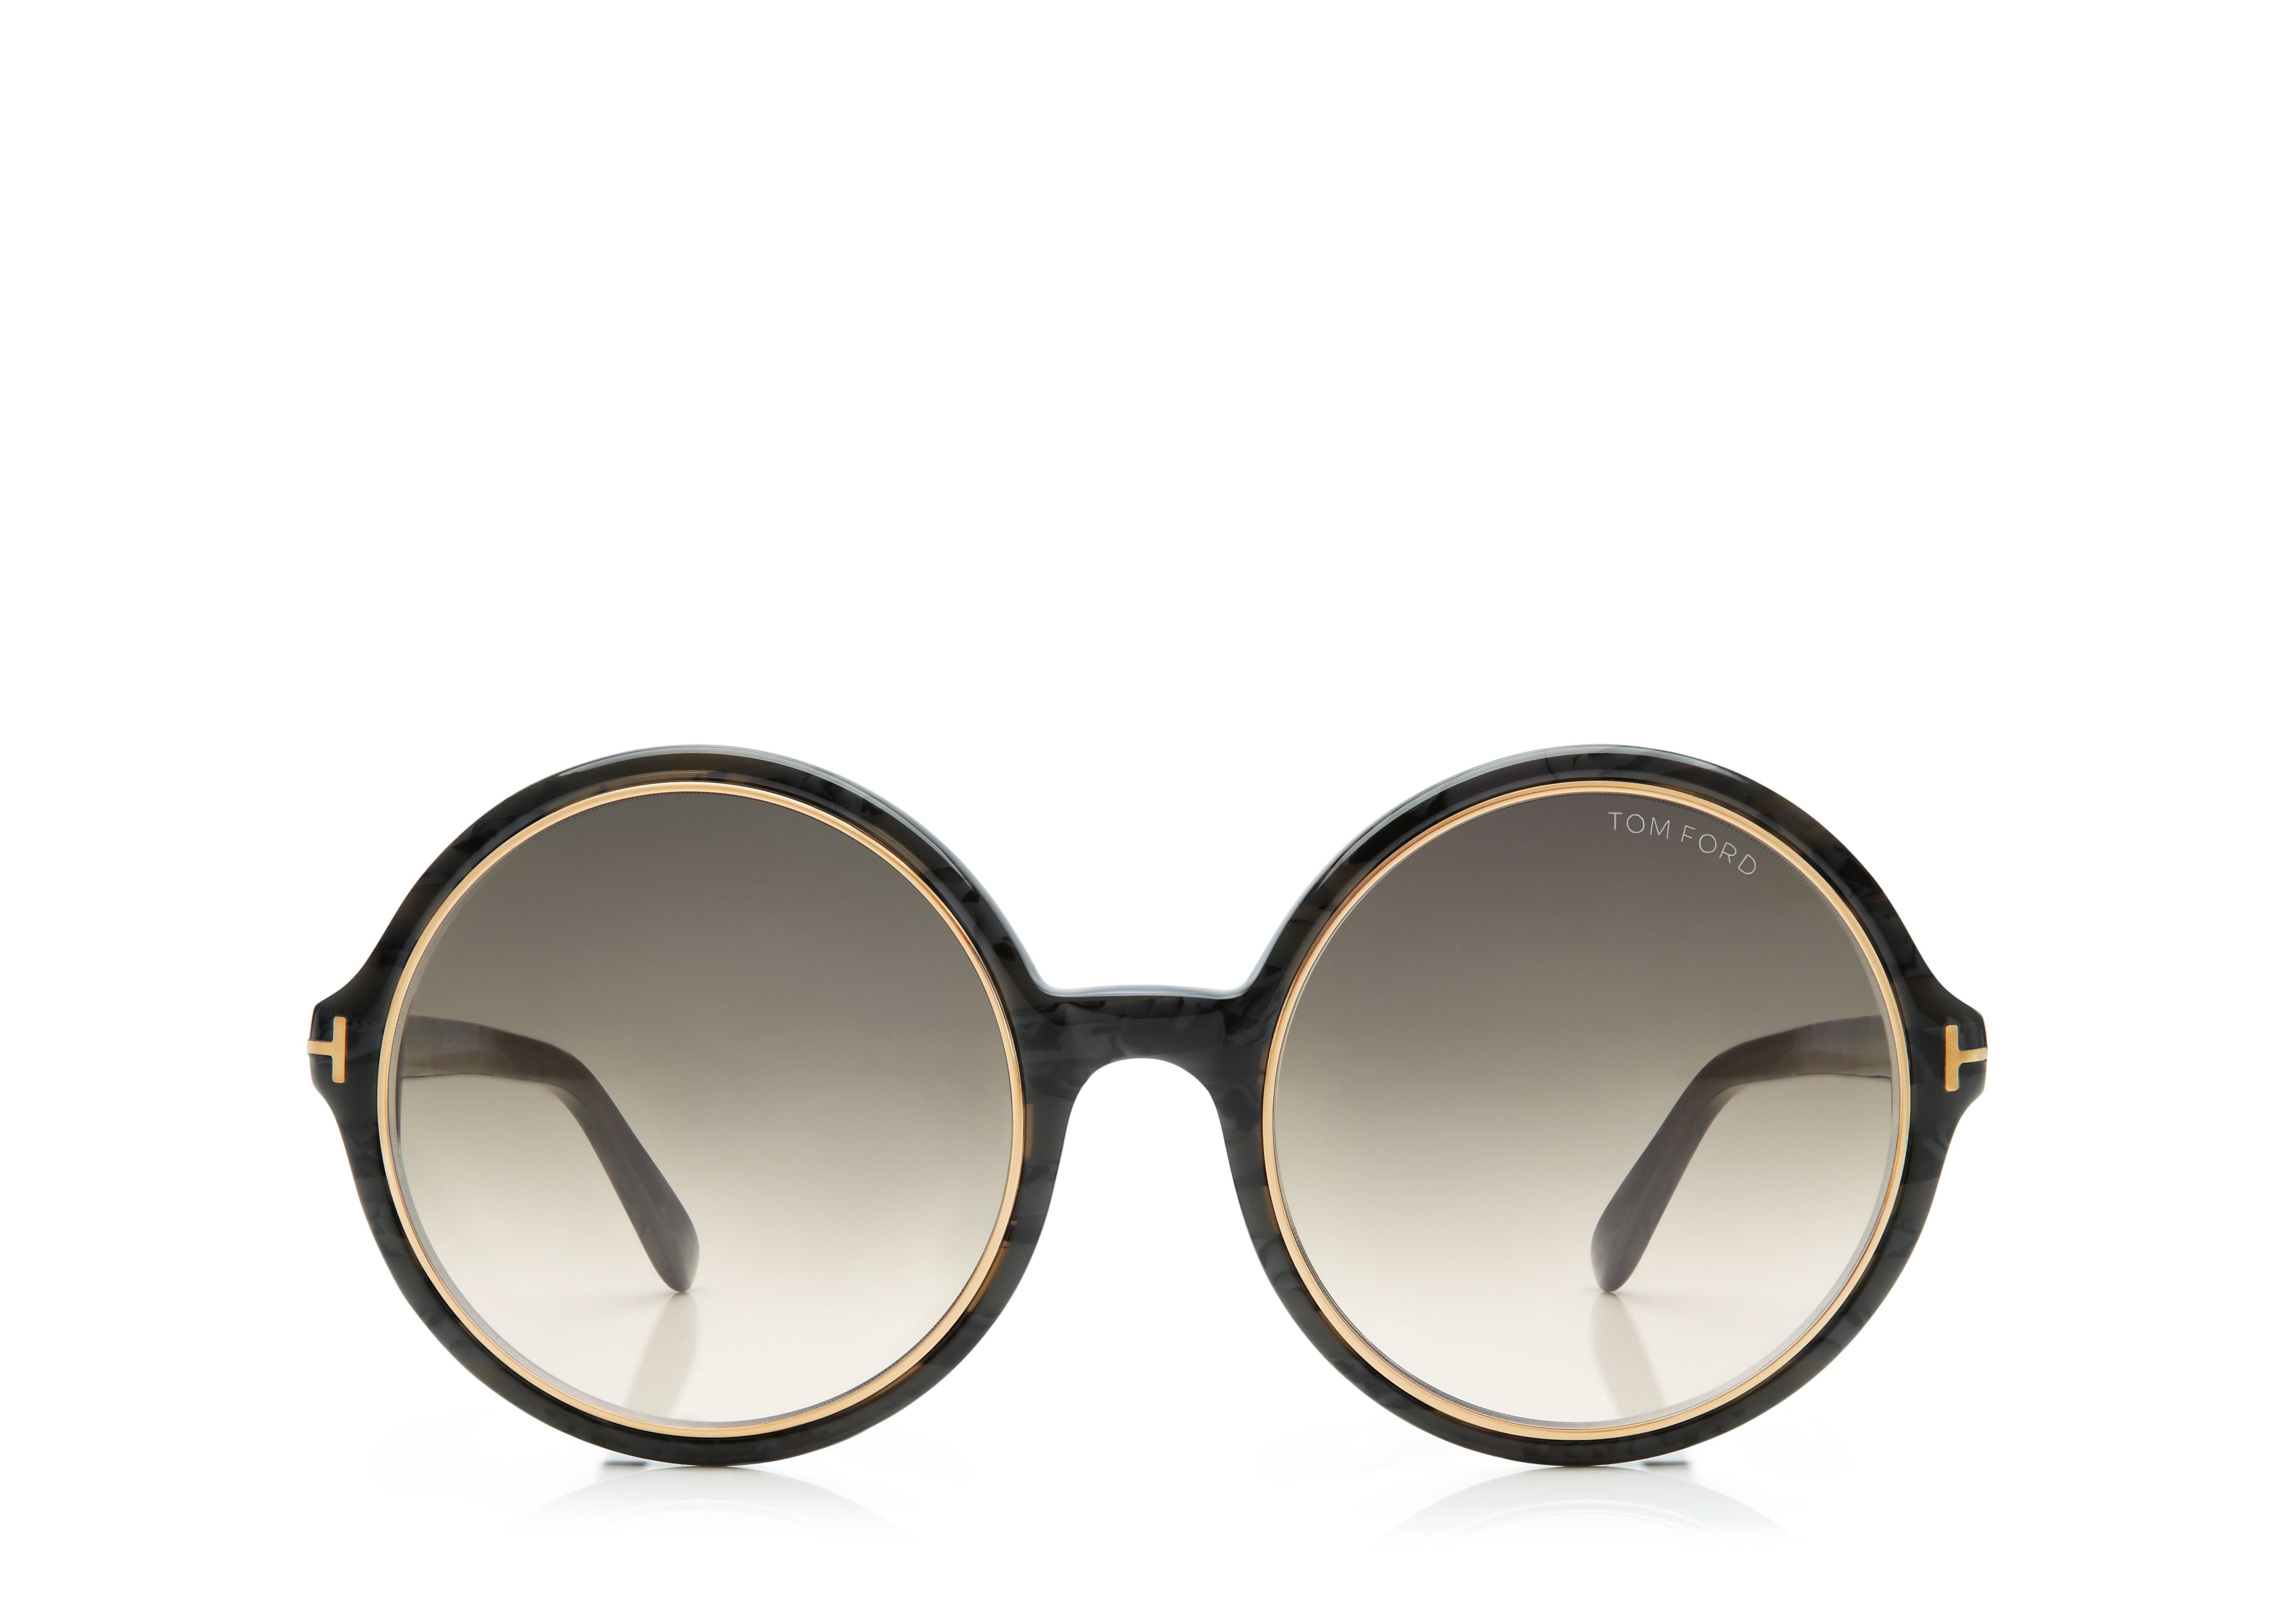 Tom ford eyewear carrie round plastic sunglasses #6